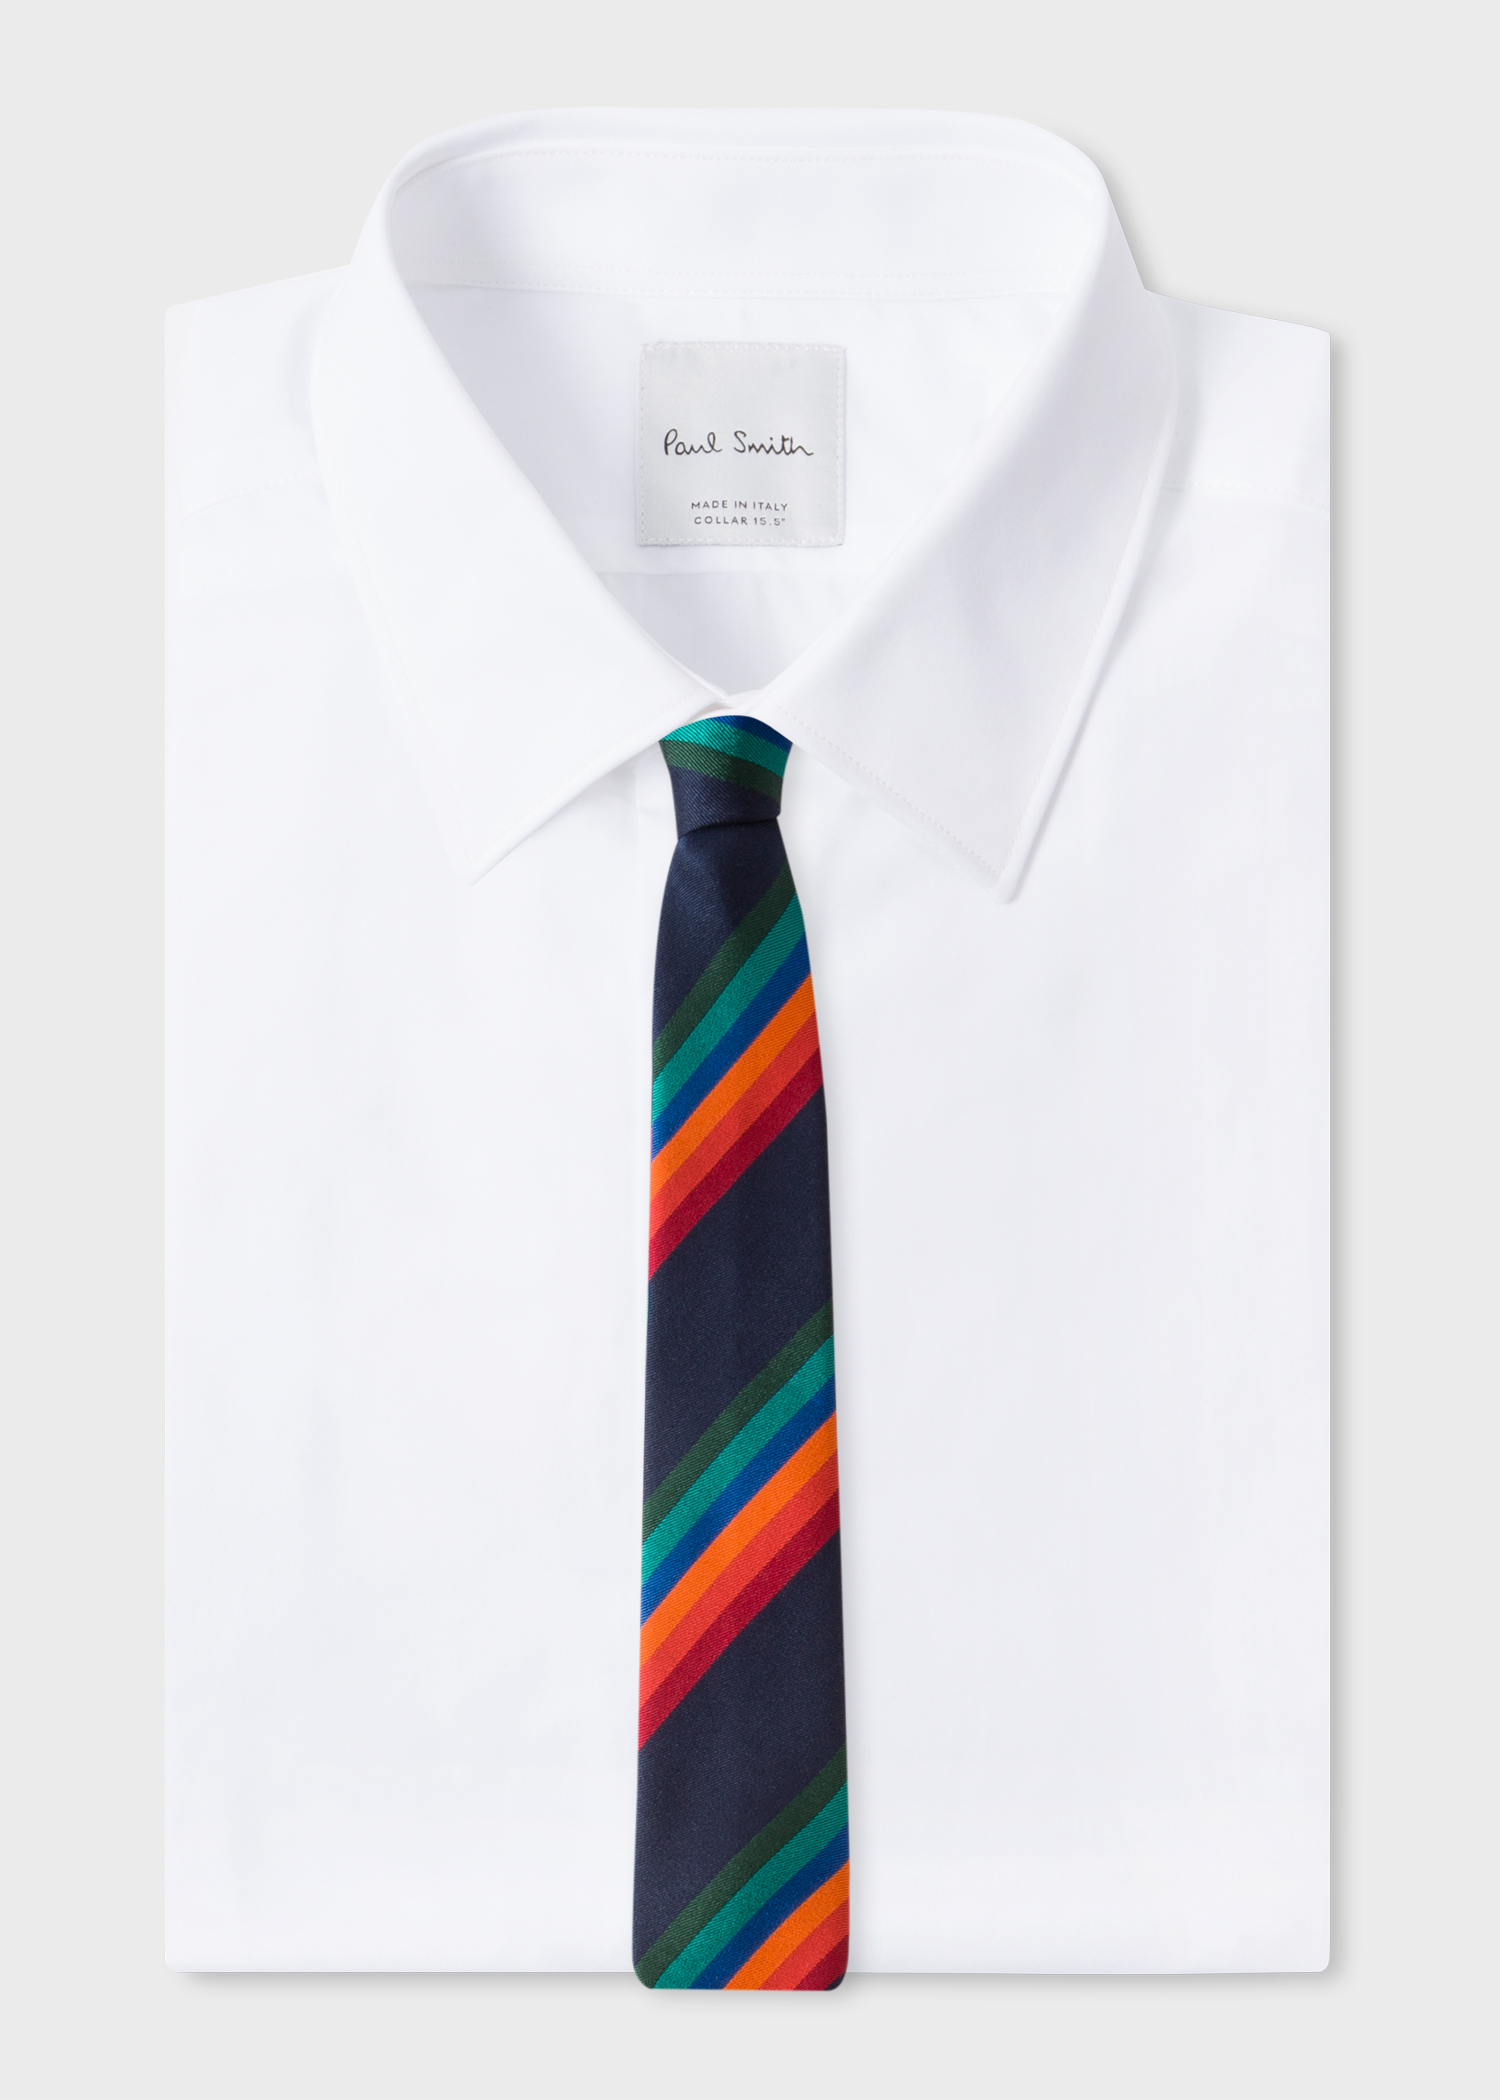 View on shirt - Men's Dark navy Diagonal Stripe Narrow Silk Tie Paul Smith